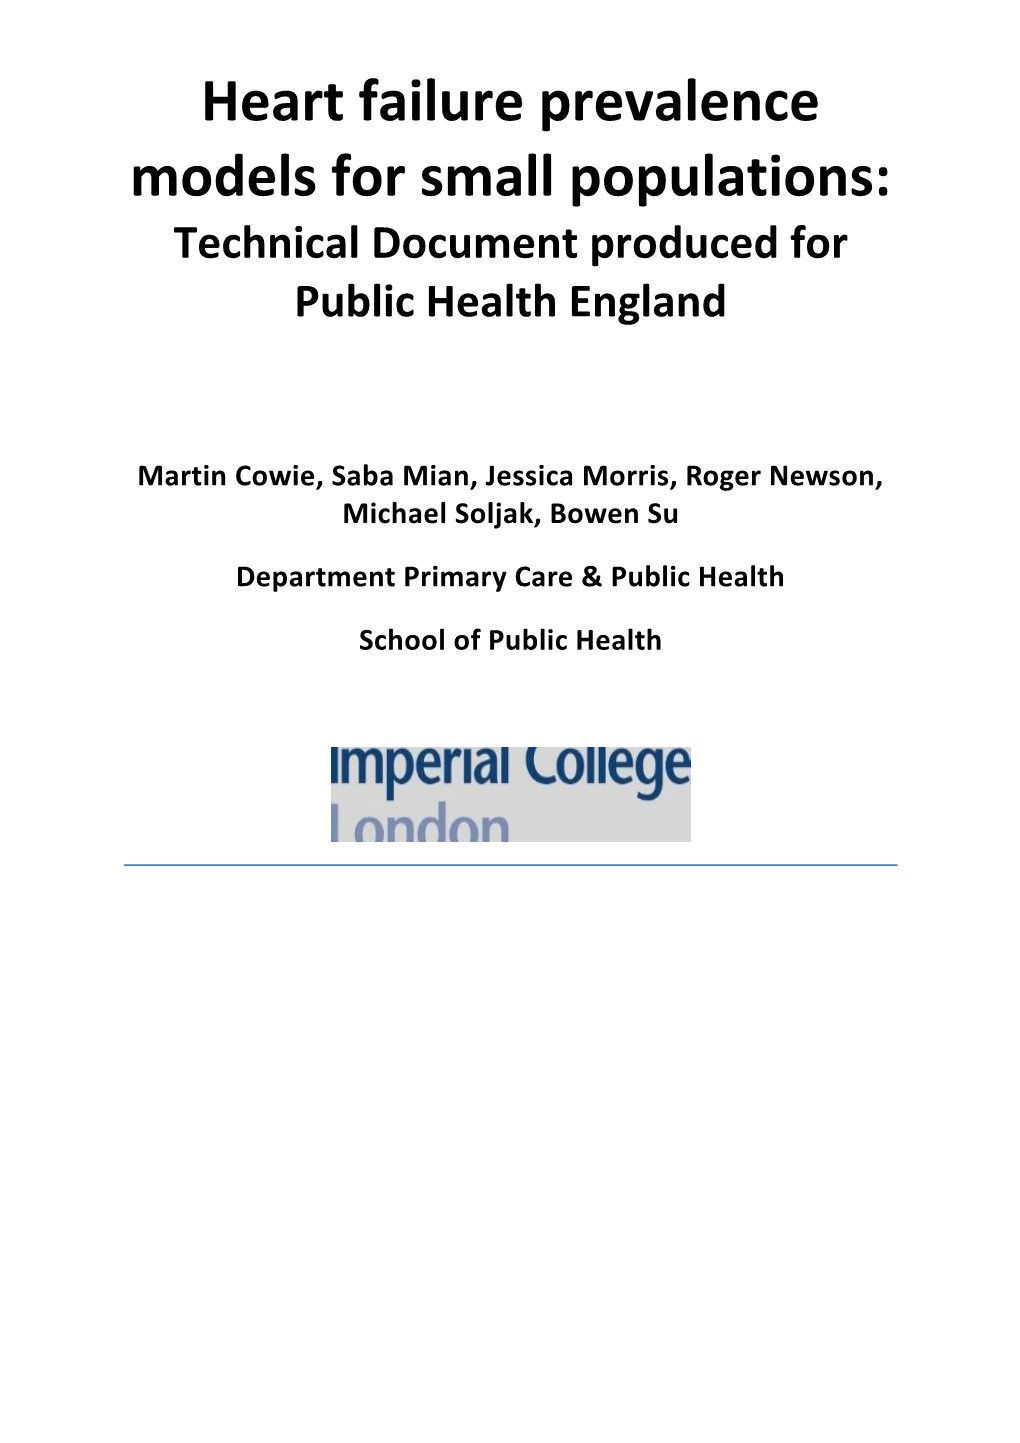 CPRD HF Analysis Technical Document V4.1